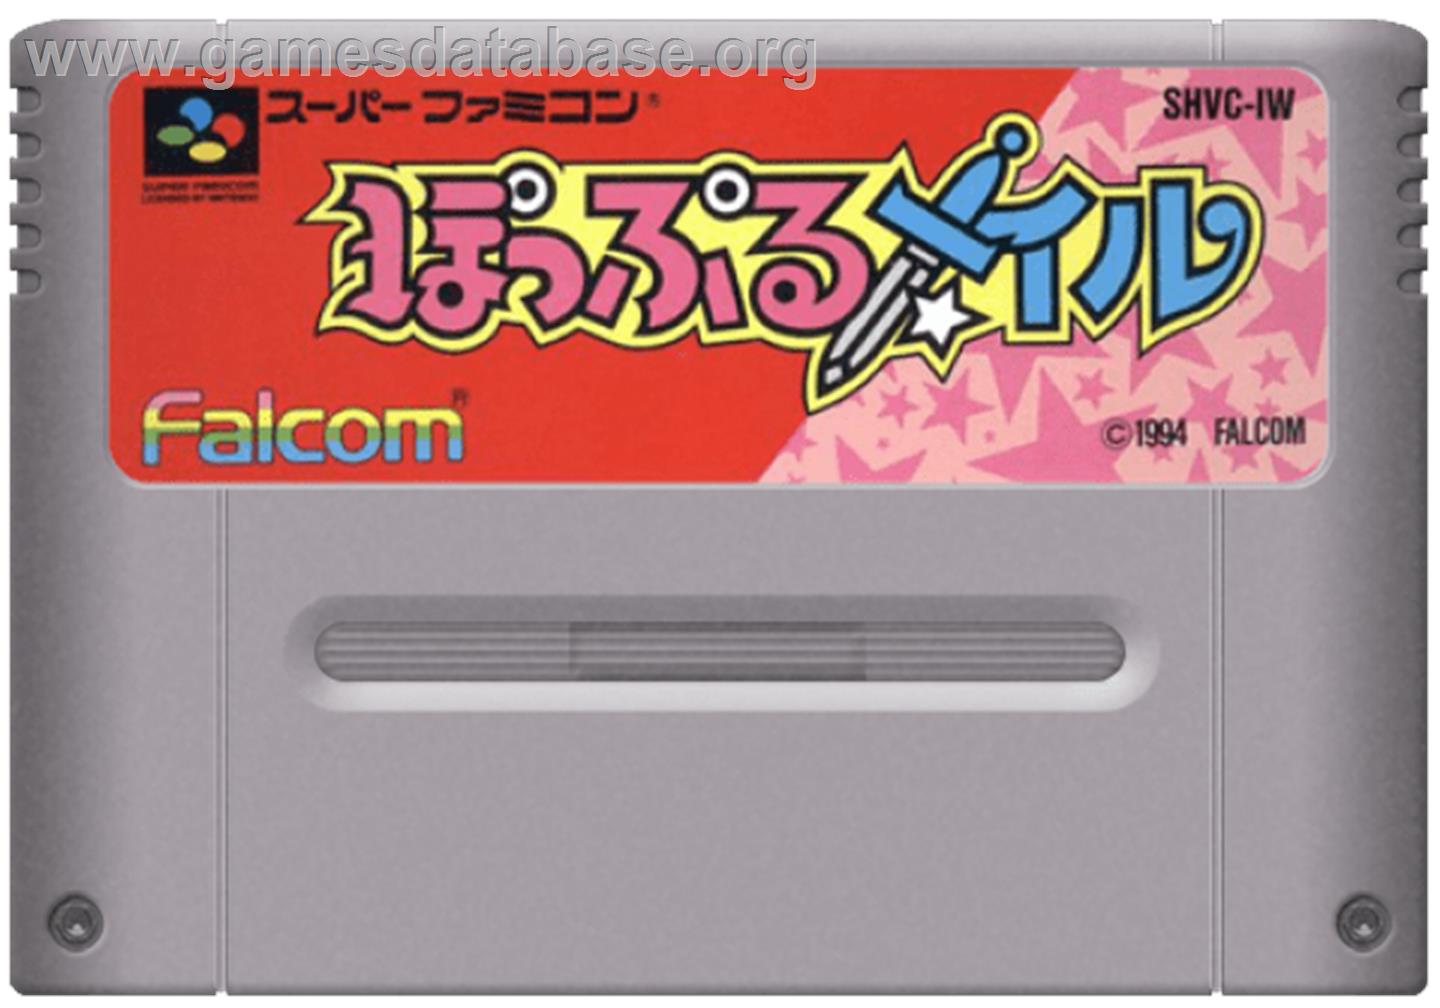 Popful Mail - Nintendo SNES - Artwork - Cartridge